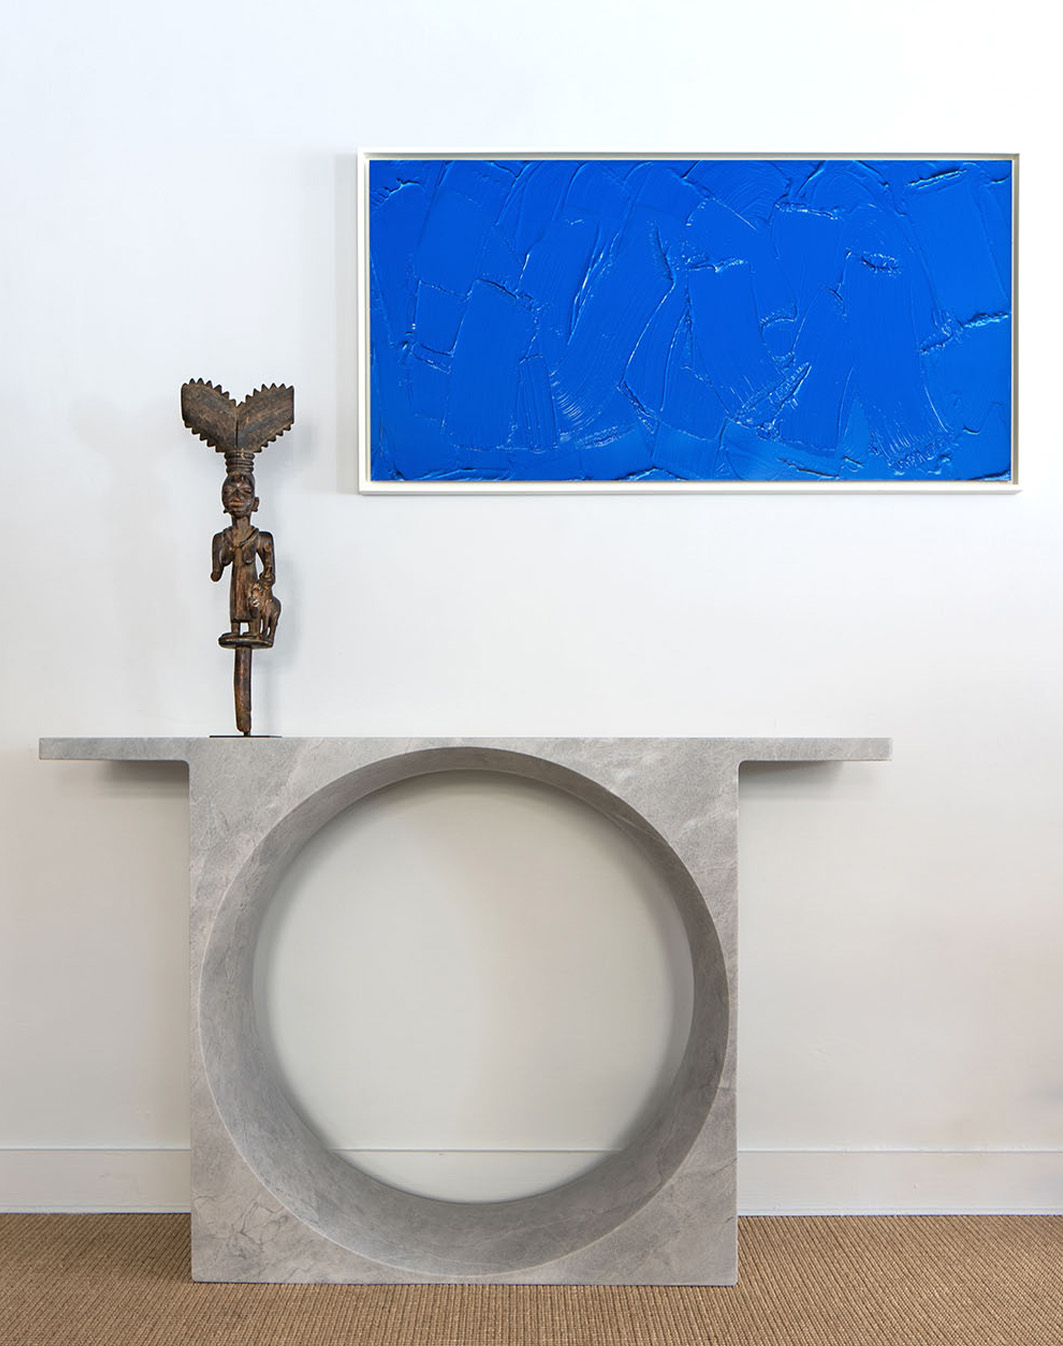 Konstantin Grcic - Lucas Ratton x kamel mennour x Galerie kreo in Saint-Tropez